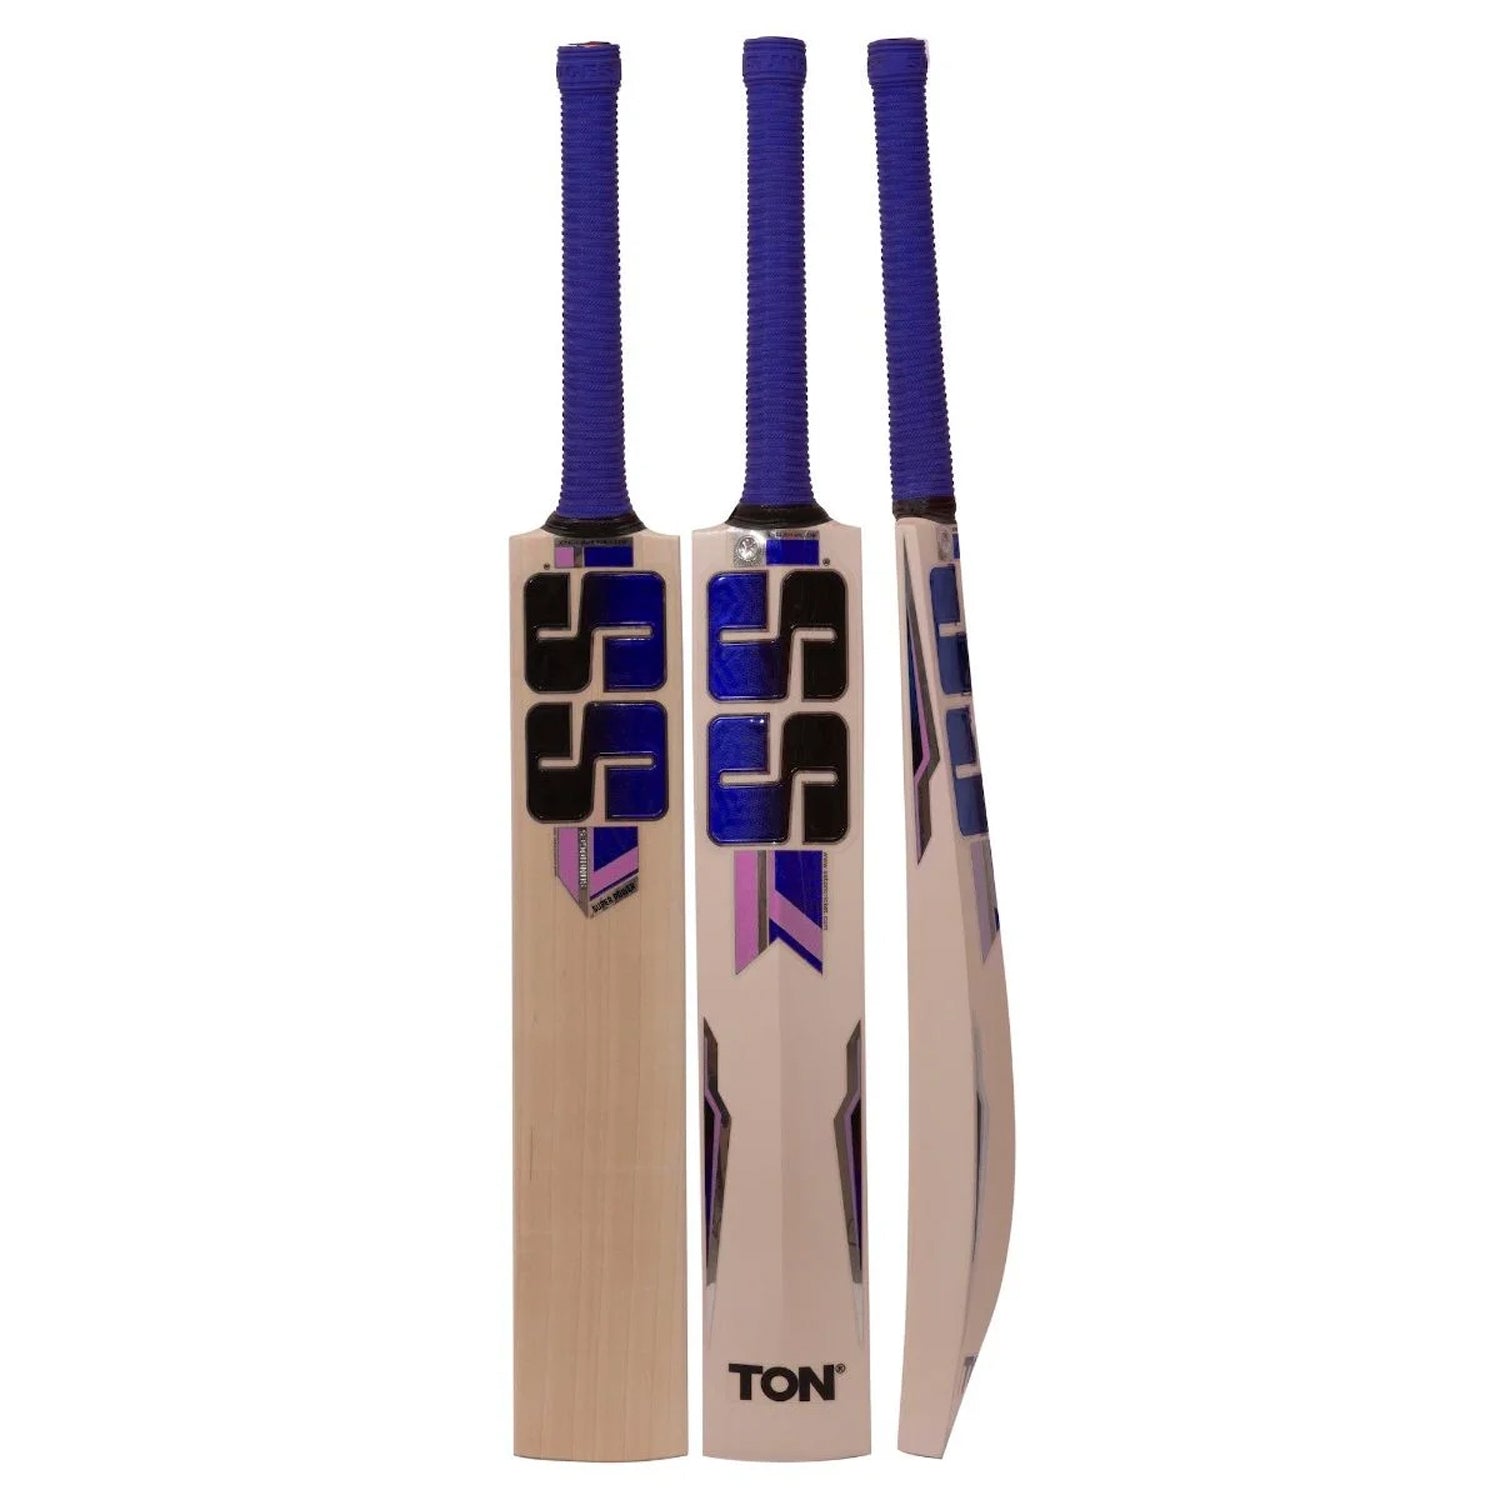 SS Super Power English Willow Cricket Bat - Best Price online Prokicksports.com